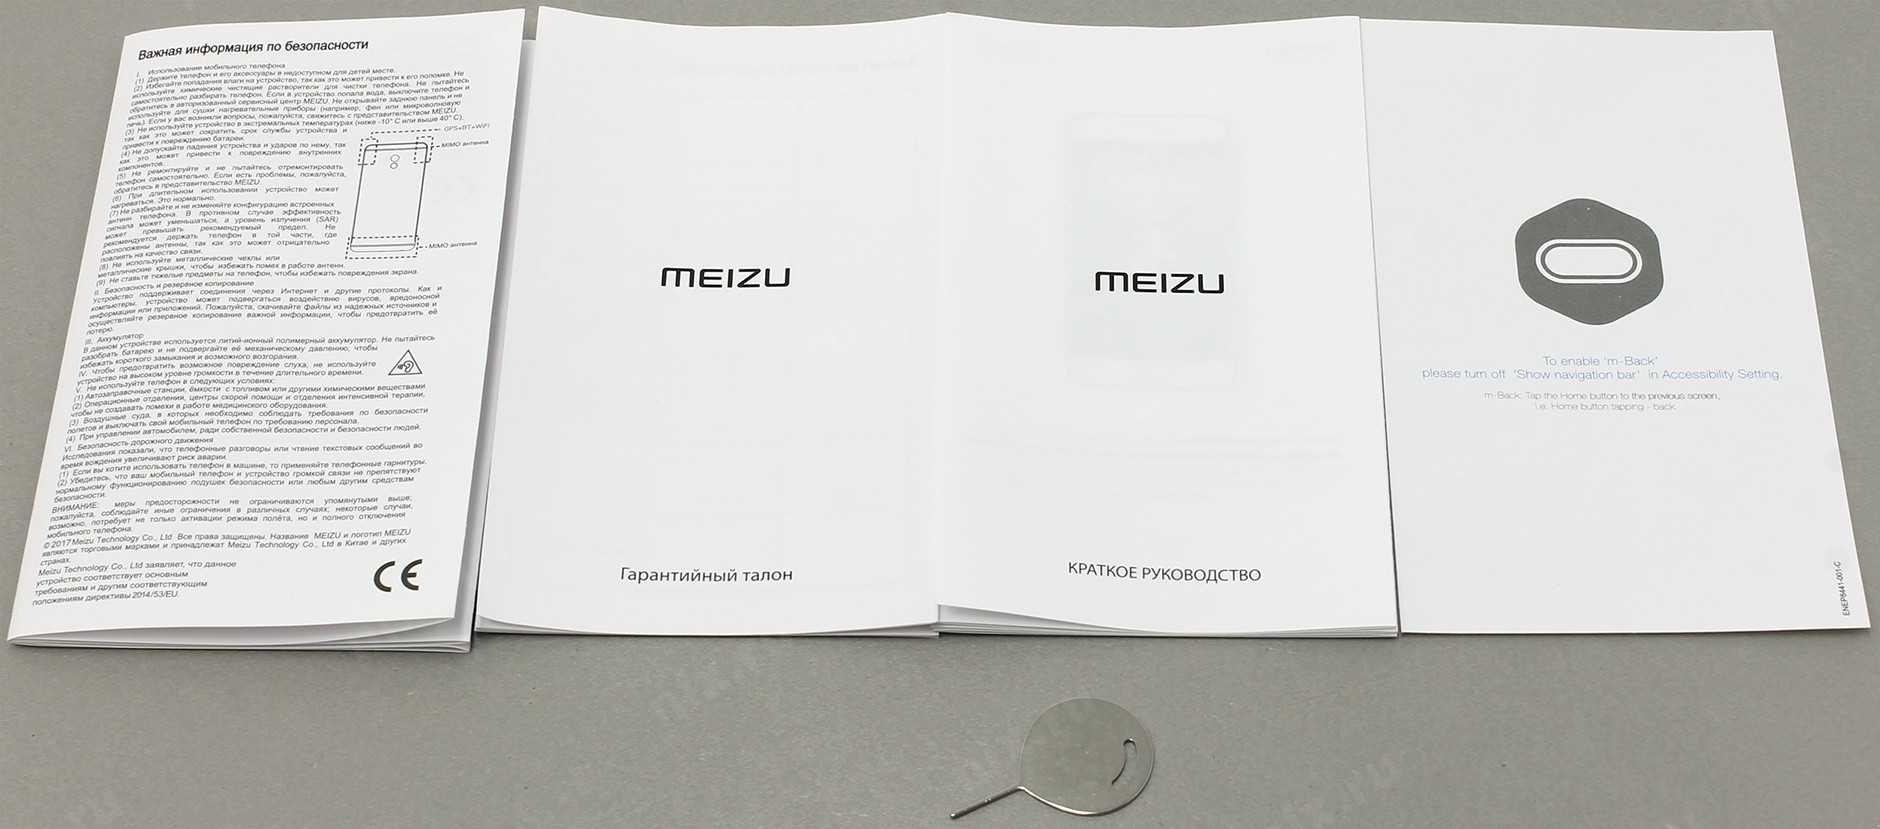 Meizu m6 note - обзор, характеристики, отзывы, цены